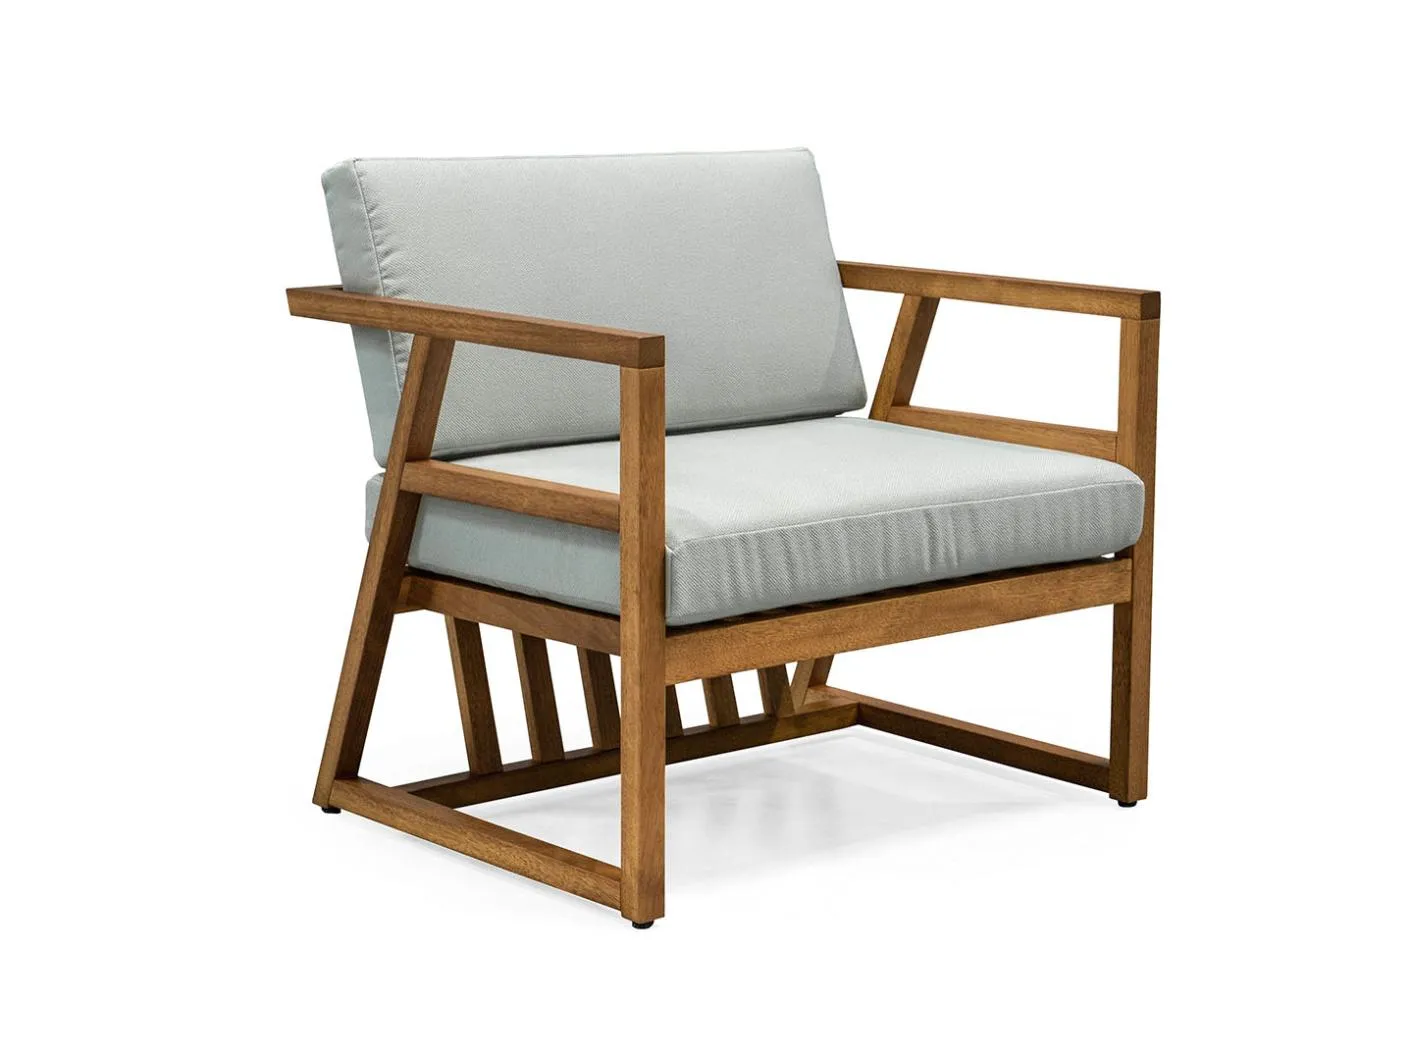 Fenabel's Pitágora Lounge Chair by CarlesiTonelli Studio